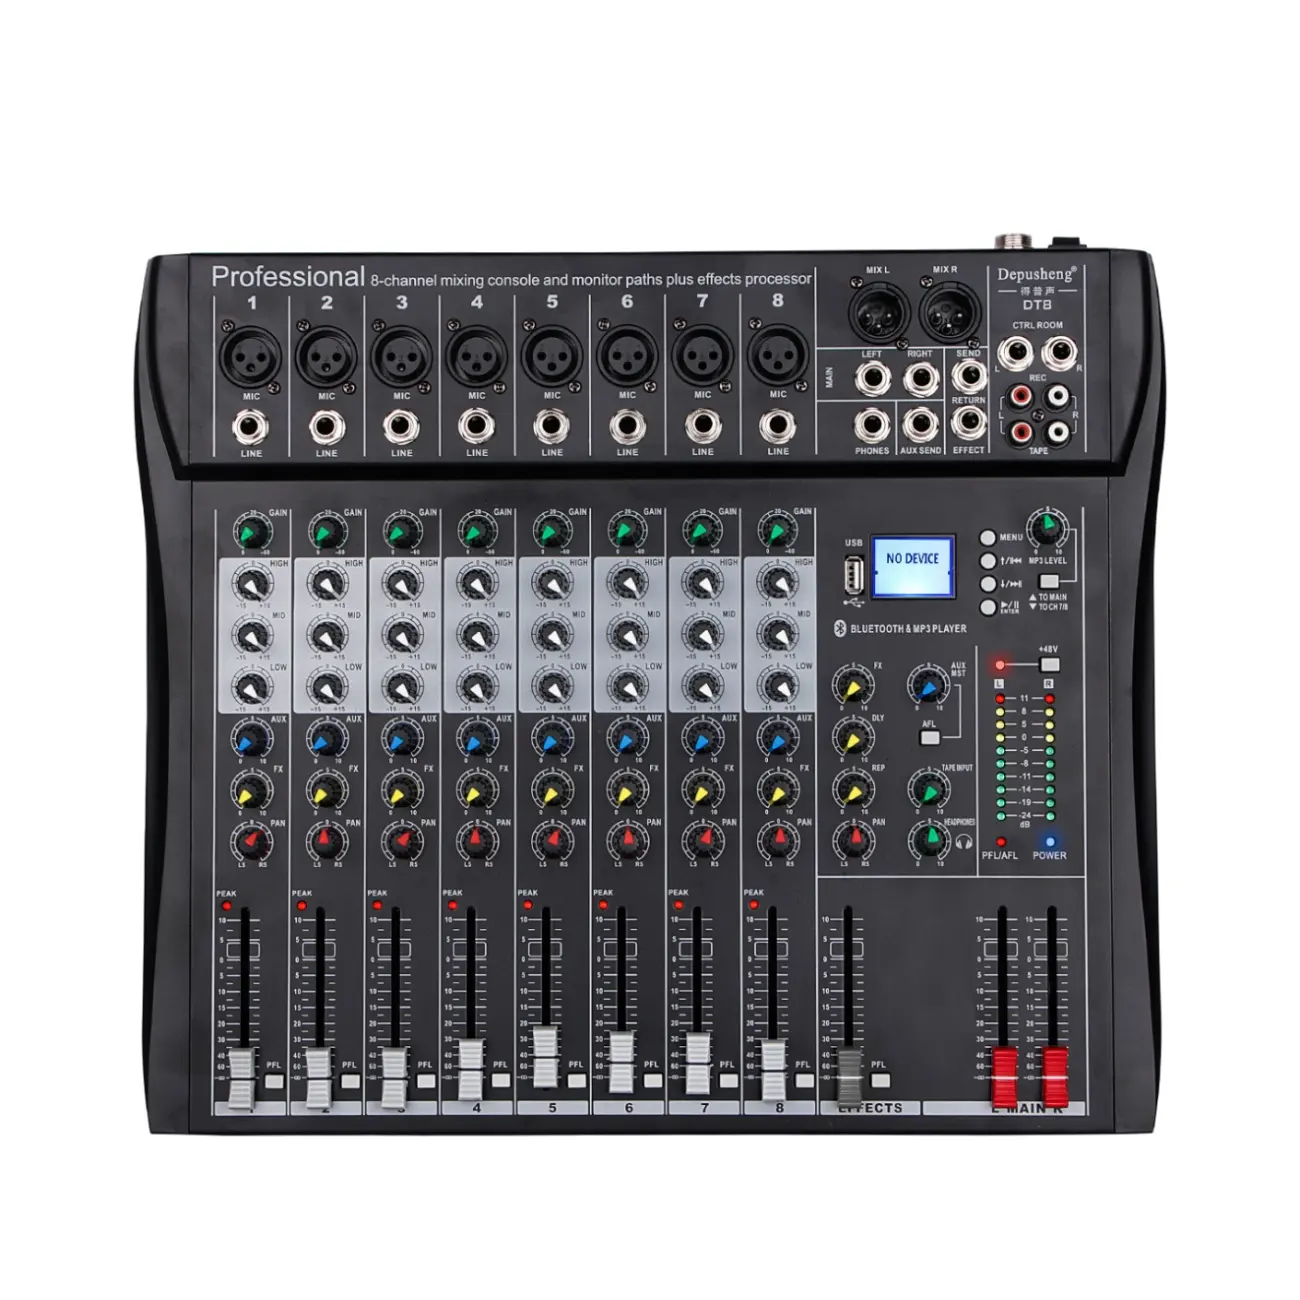 Depusheng DT8 professional DJ mixing USB input 48V performance 8 channel audio mixer